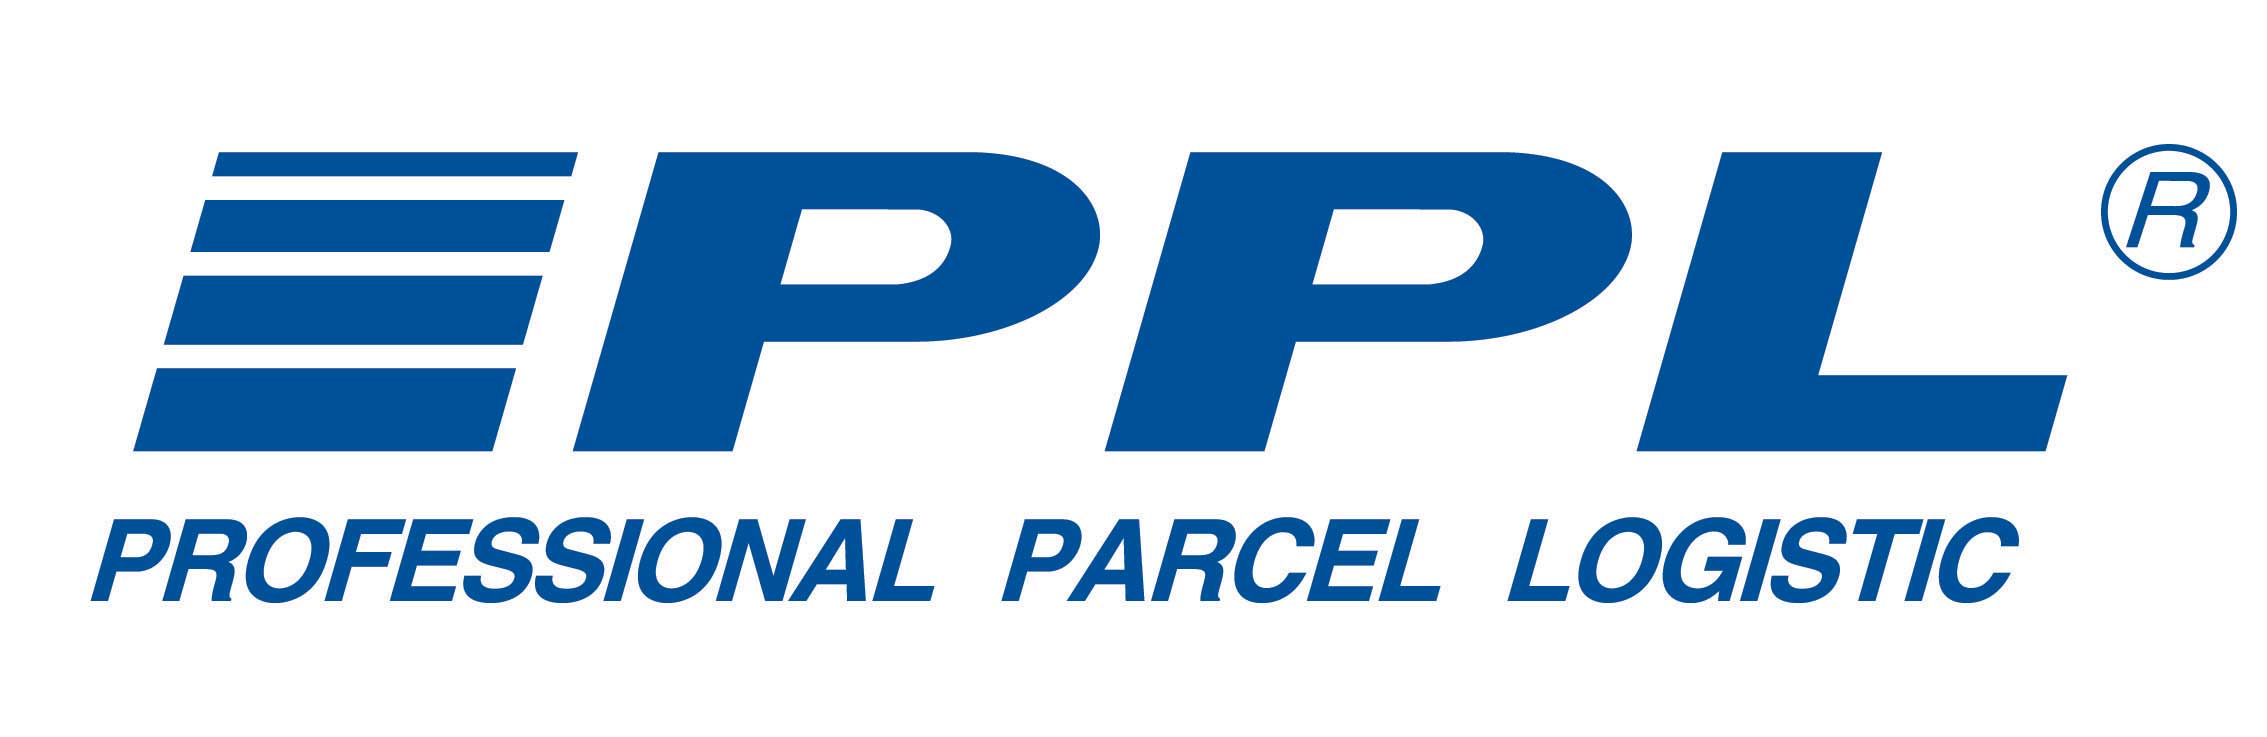 ppl_cz_logo.jpg (65 KB)